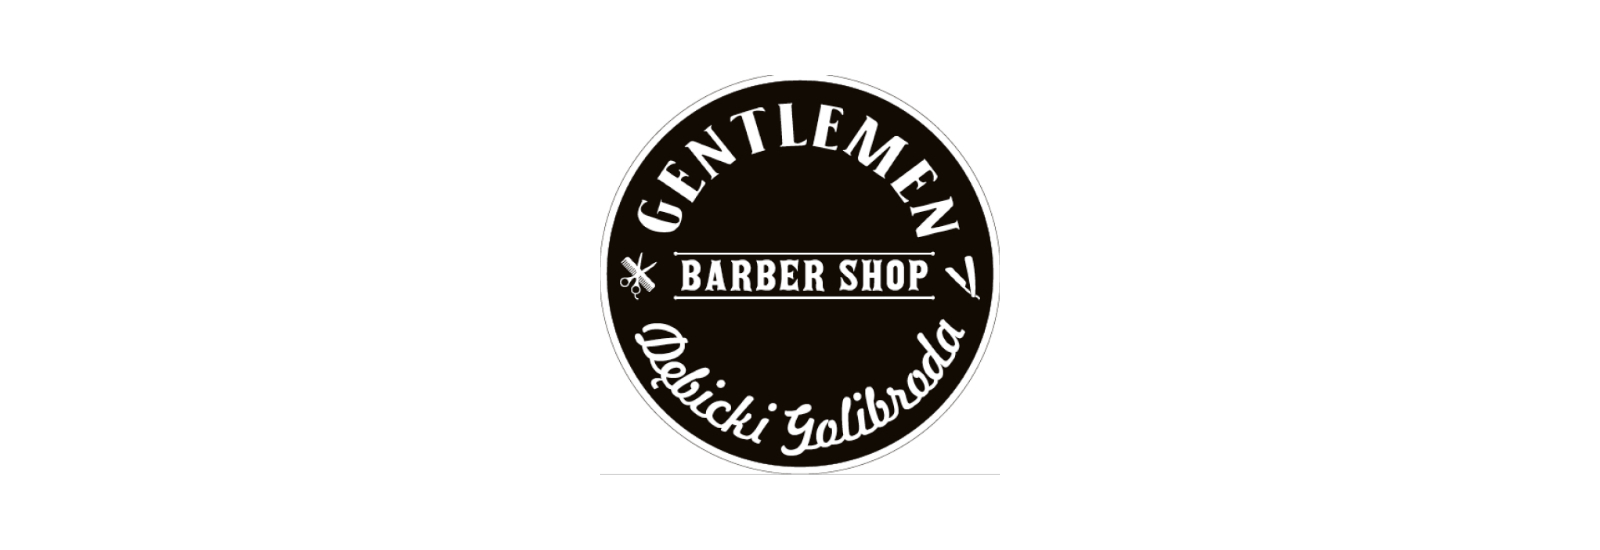 Gentlemen Barber Shop Dębica- Rynek